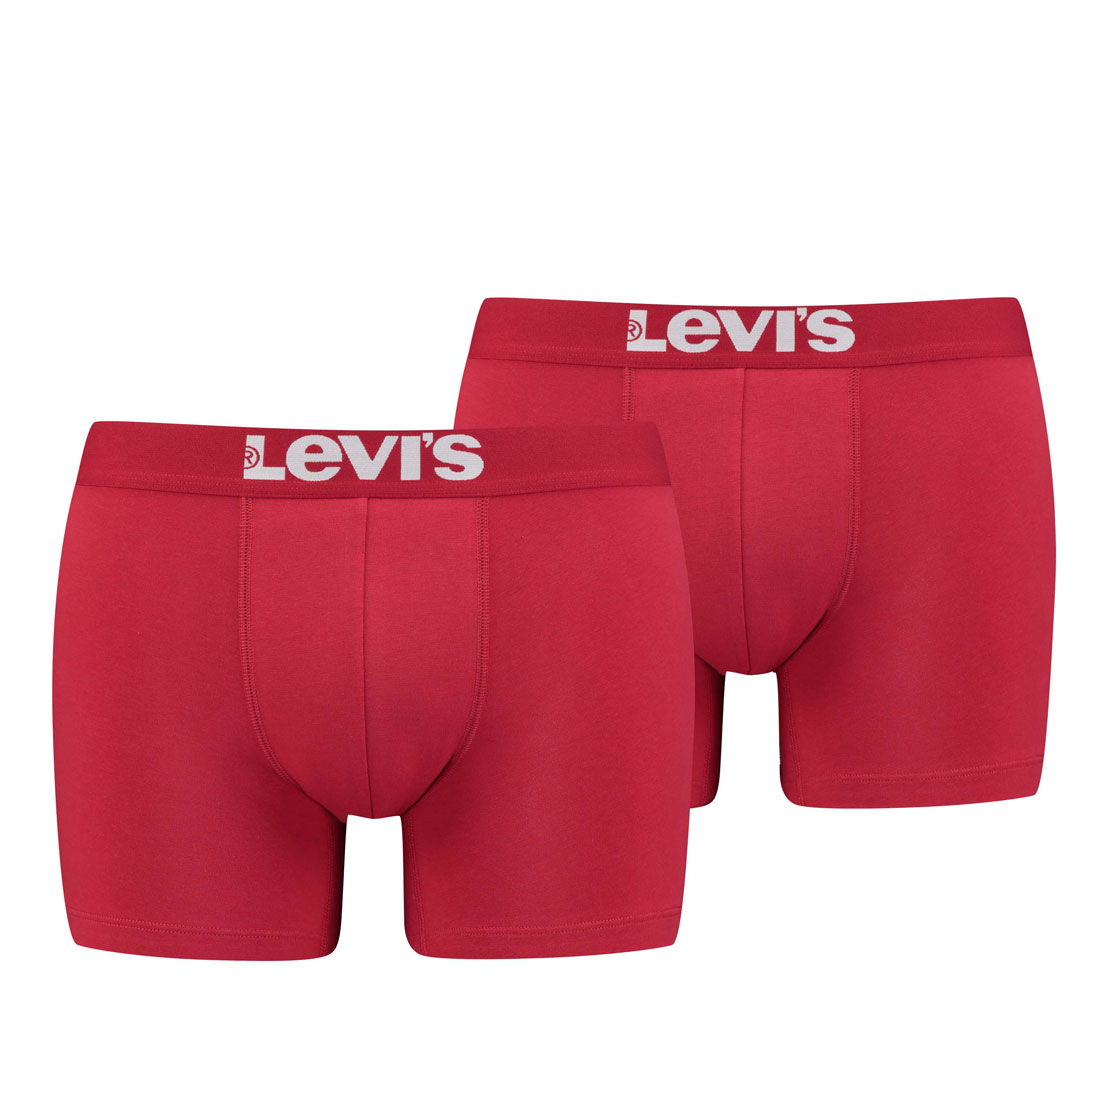 Levi's Herren Levis Men SOLID Basic Boxer 2P Boxershorts, Rot (Chili Pepper 186), Medium (Herstellergröße: 020) (2er Pack)